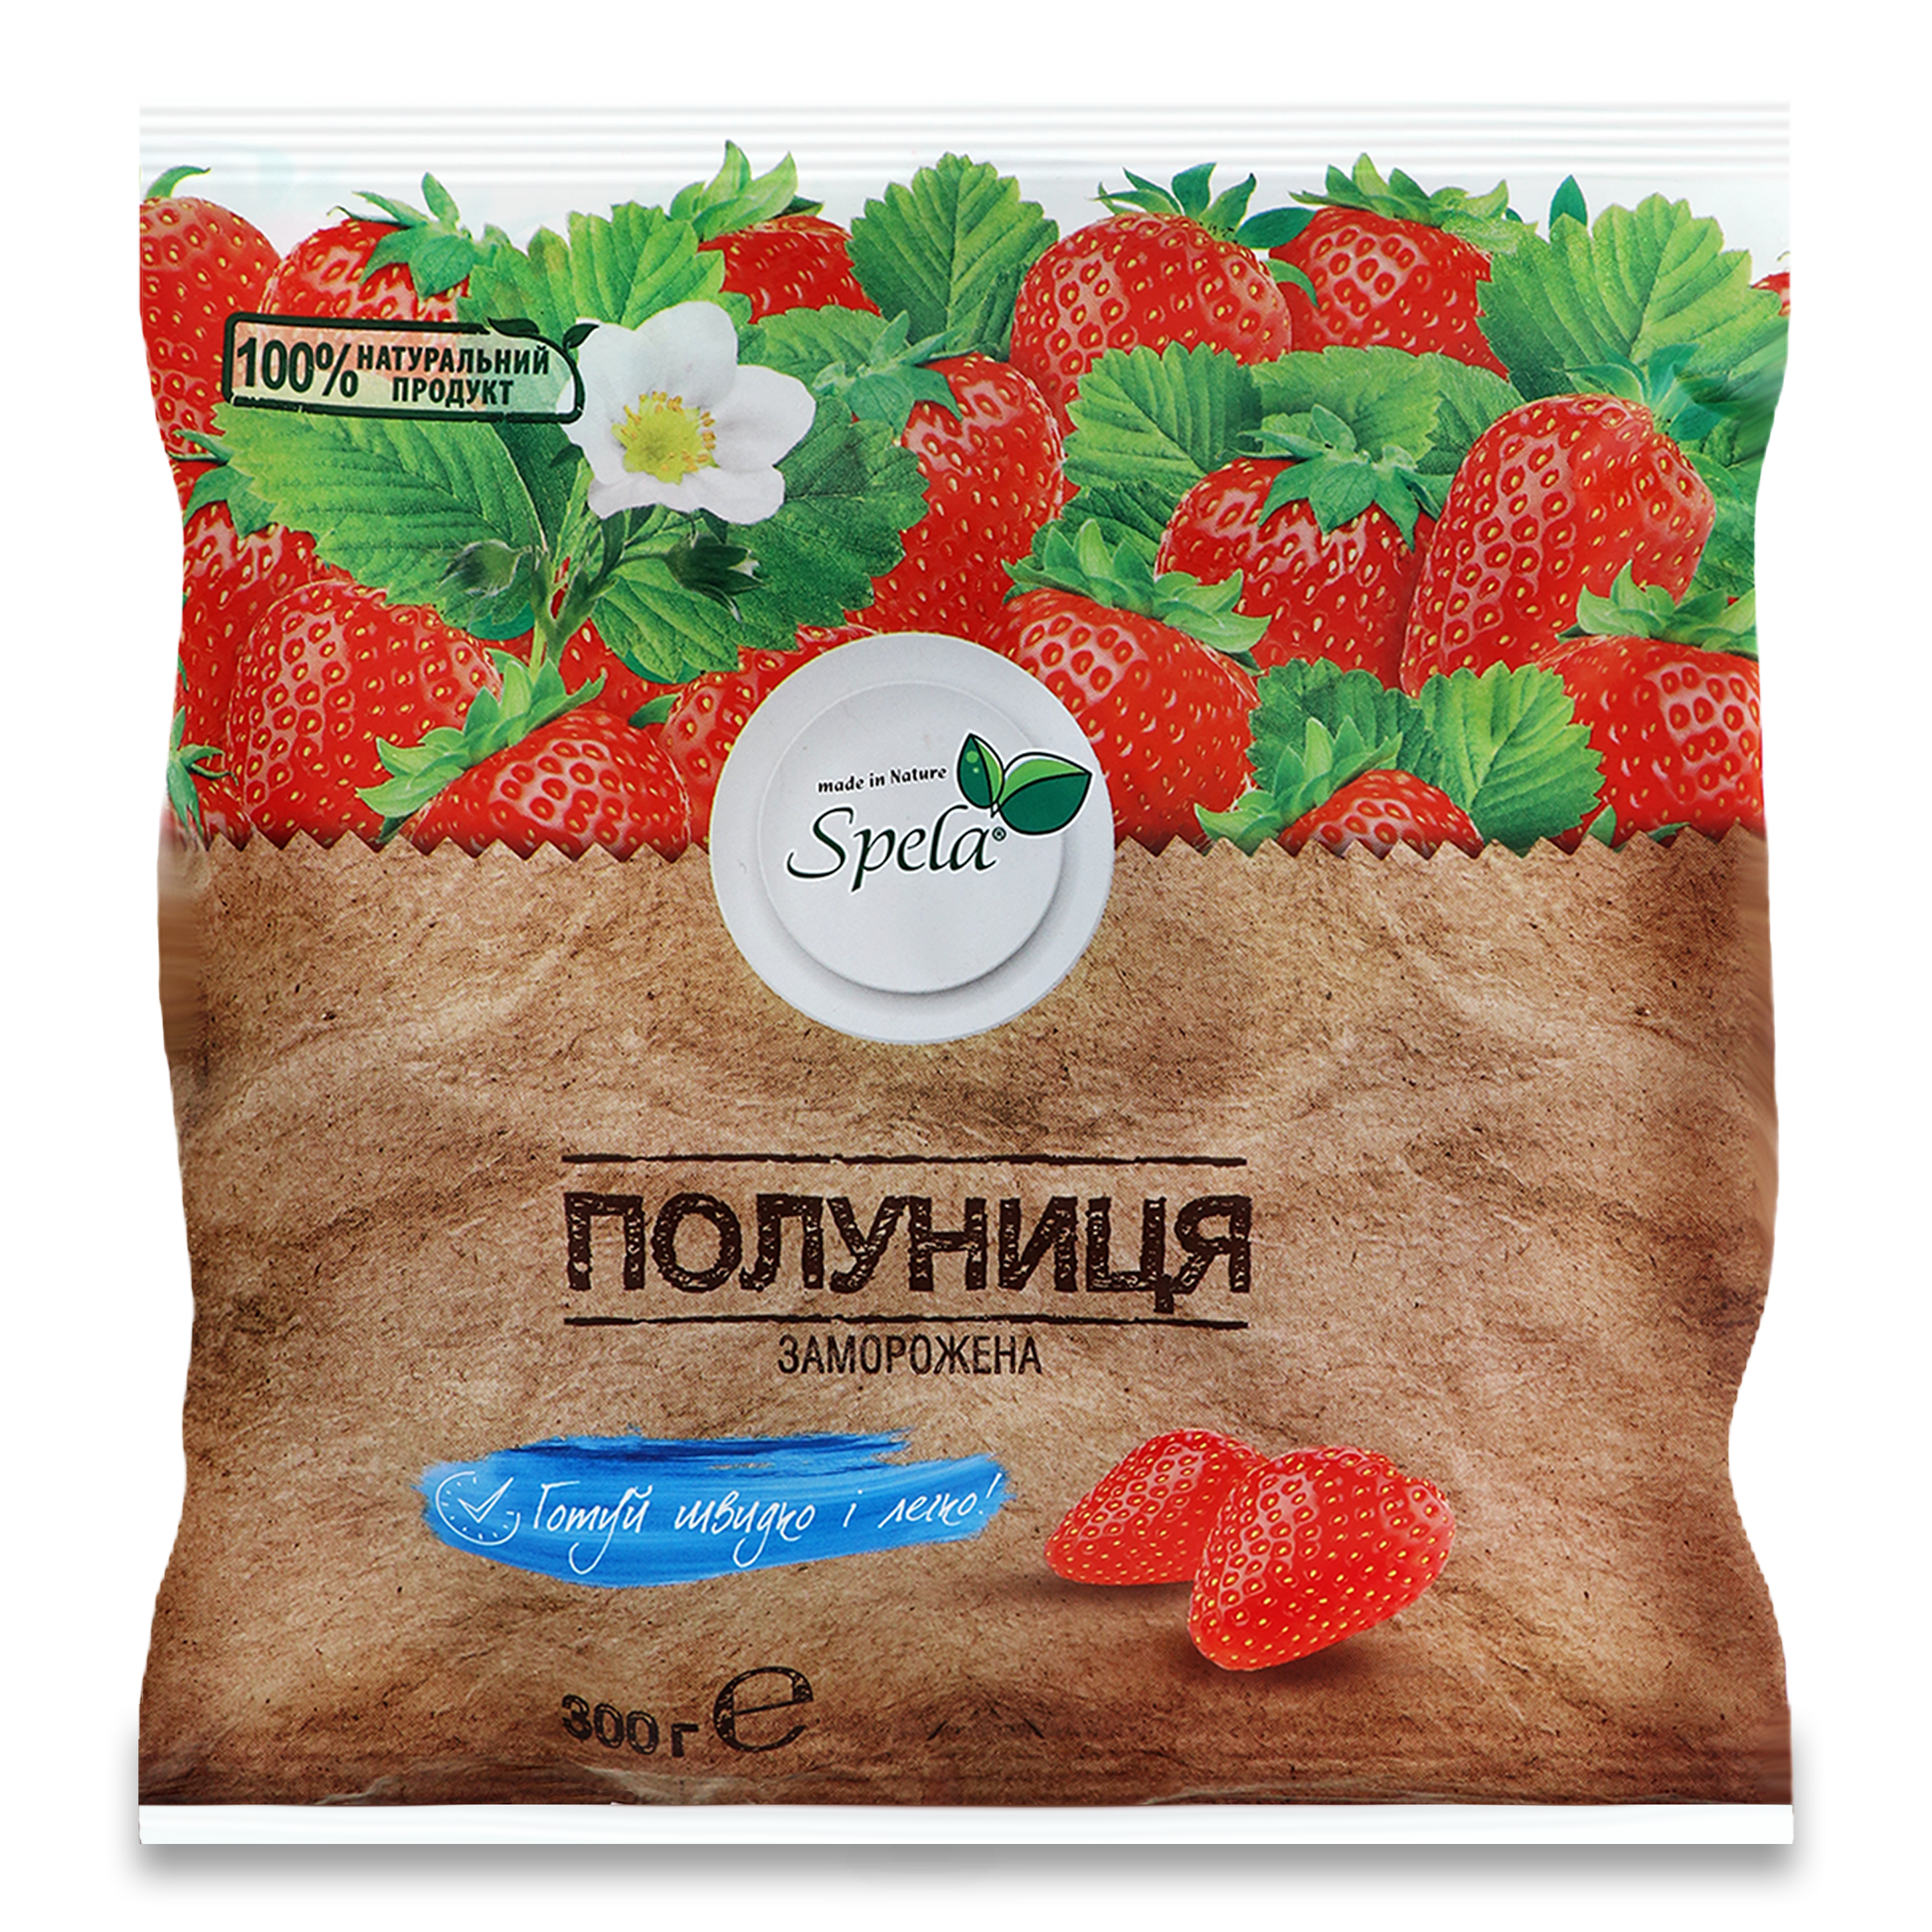 Spela Frozen Strawberries 300g